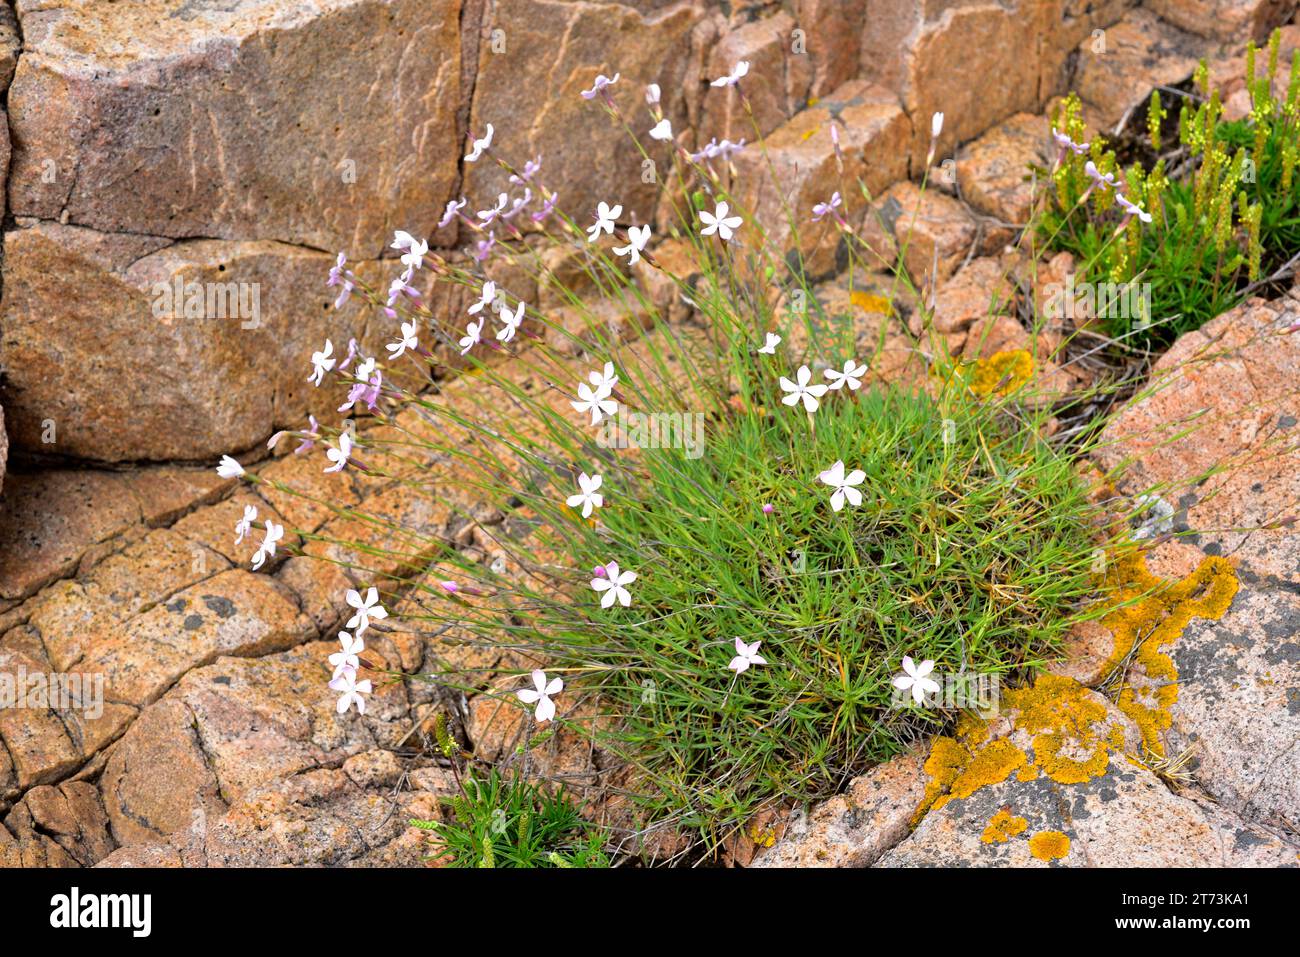 Dianthus pyrenaicus attenuatus is a perennial plant native to eastern Spain that grows on acidic soils. This photo was taken in Aiguablava, Girona, Ca Stock Photo